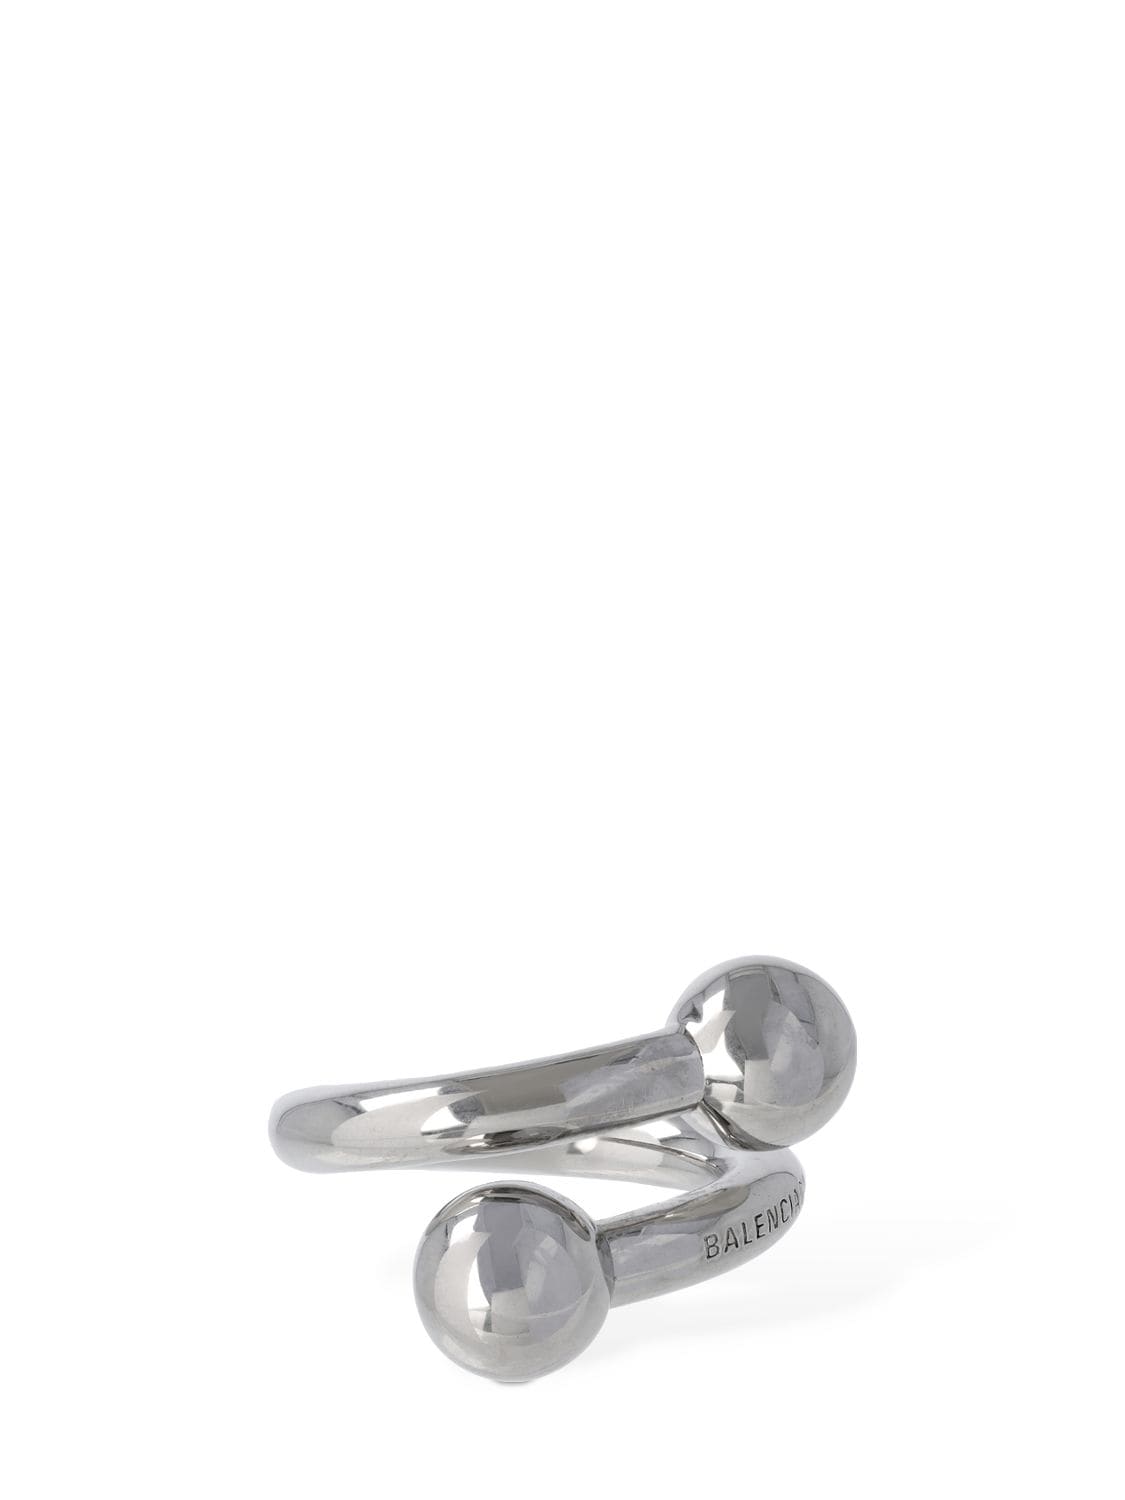 Balenciaga Skate Brass Ring In Silver